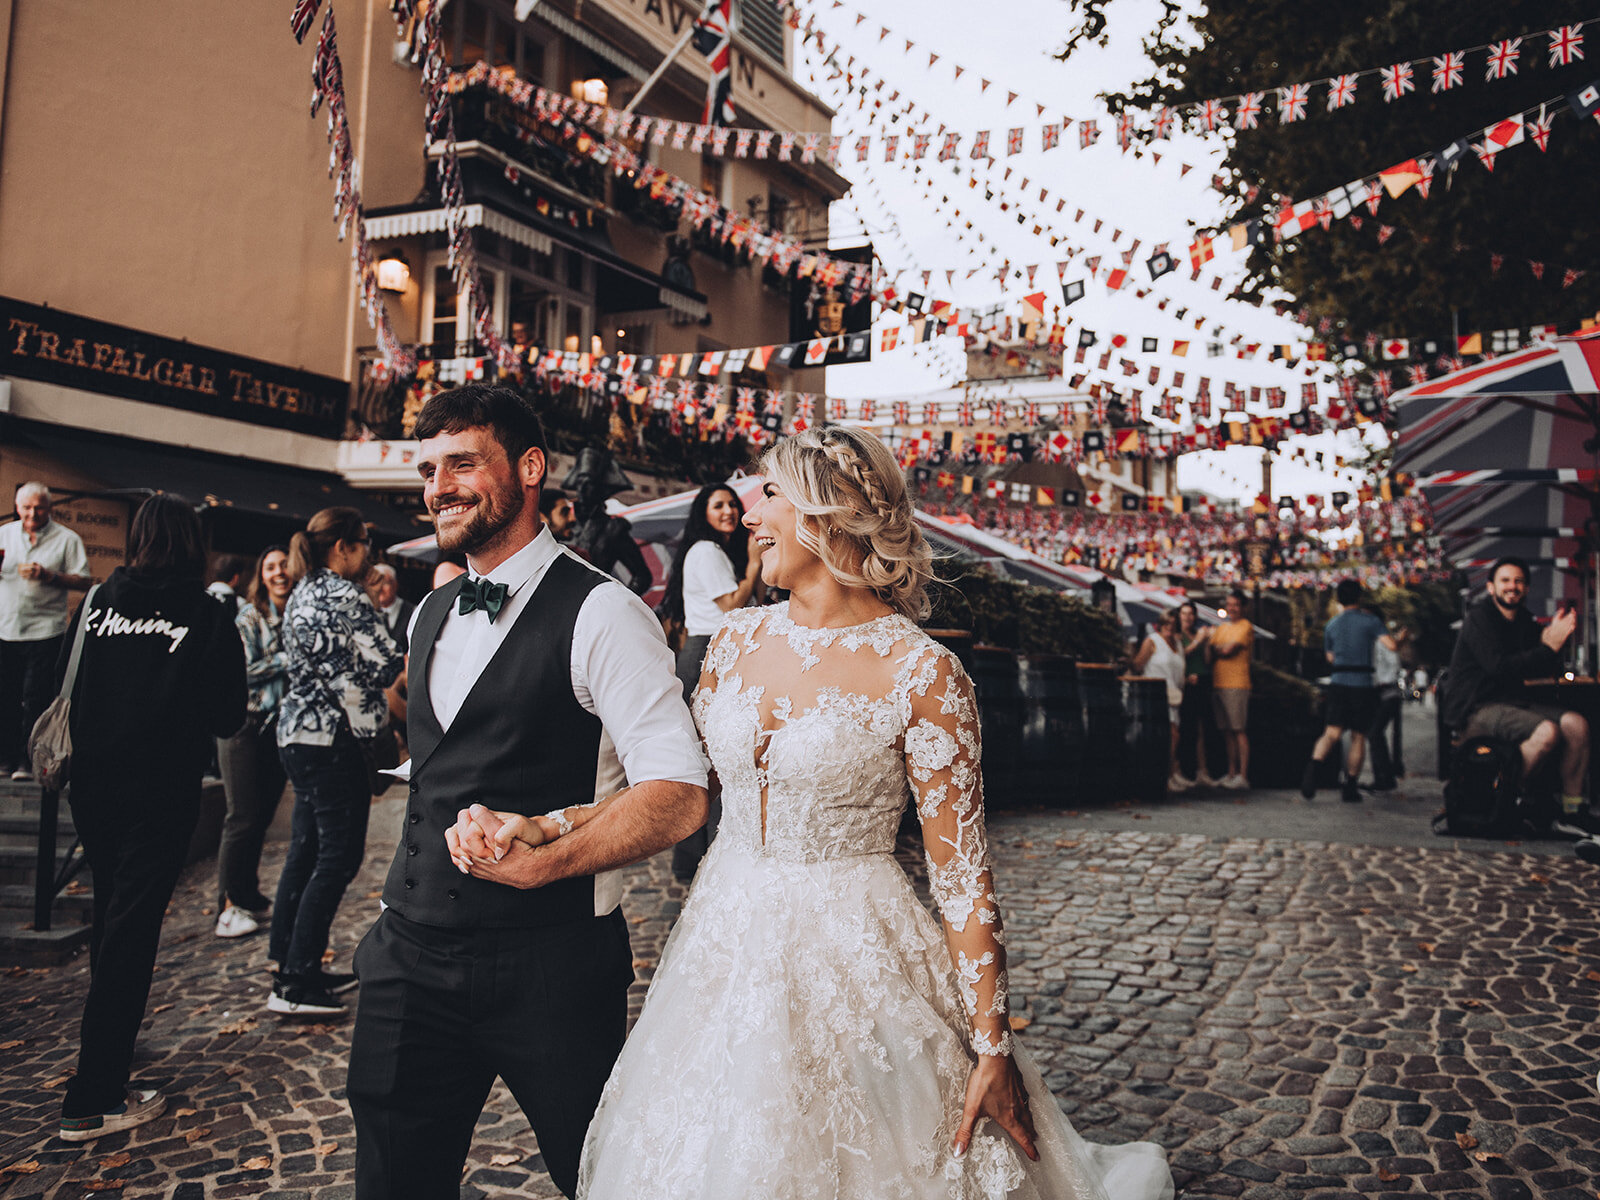 Bride and groom walking underneath bunting at Trafalgar Tavern in London